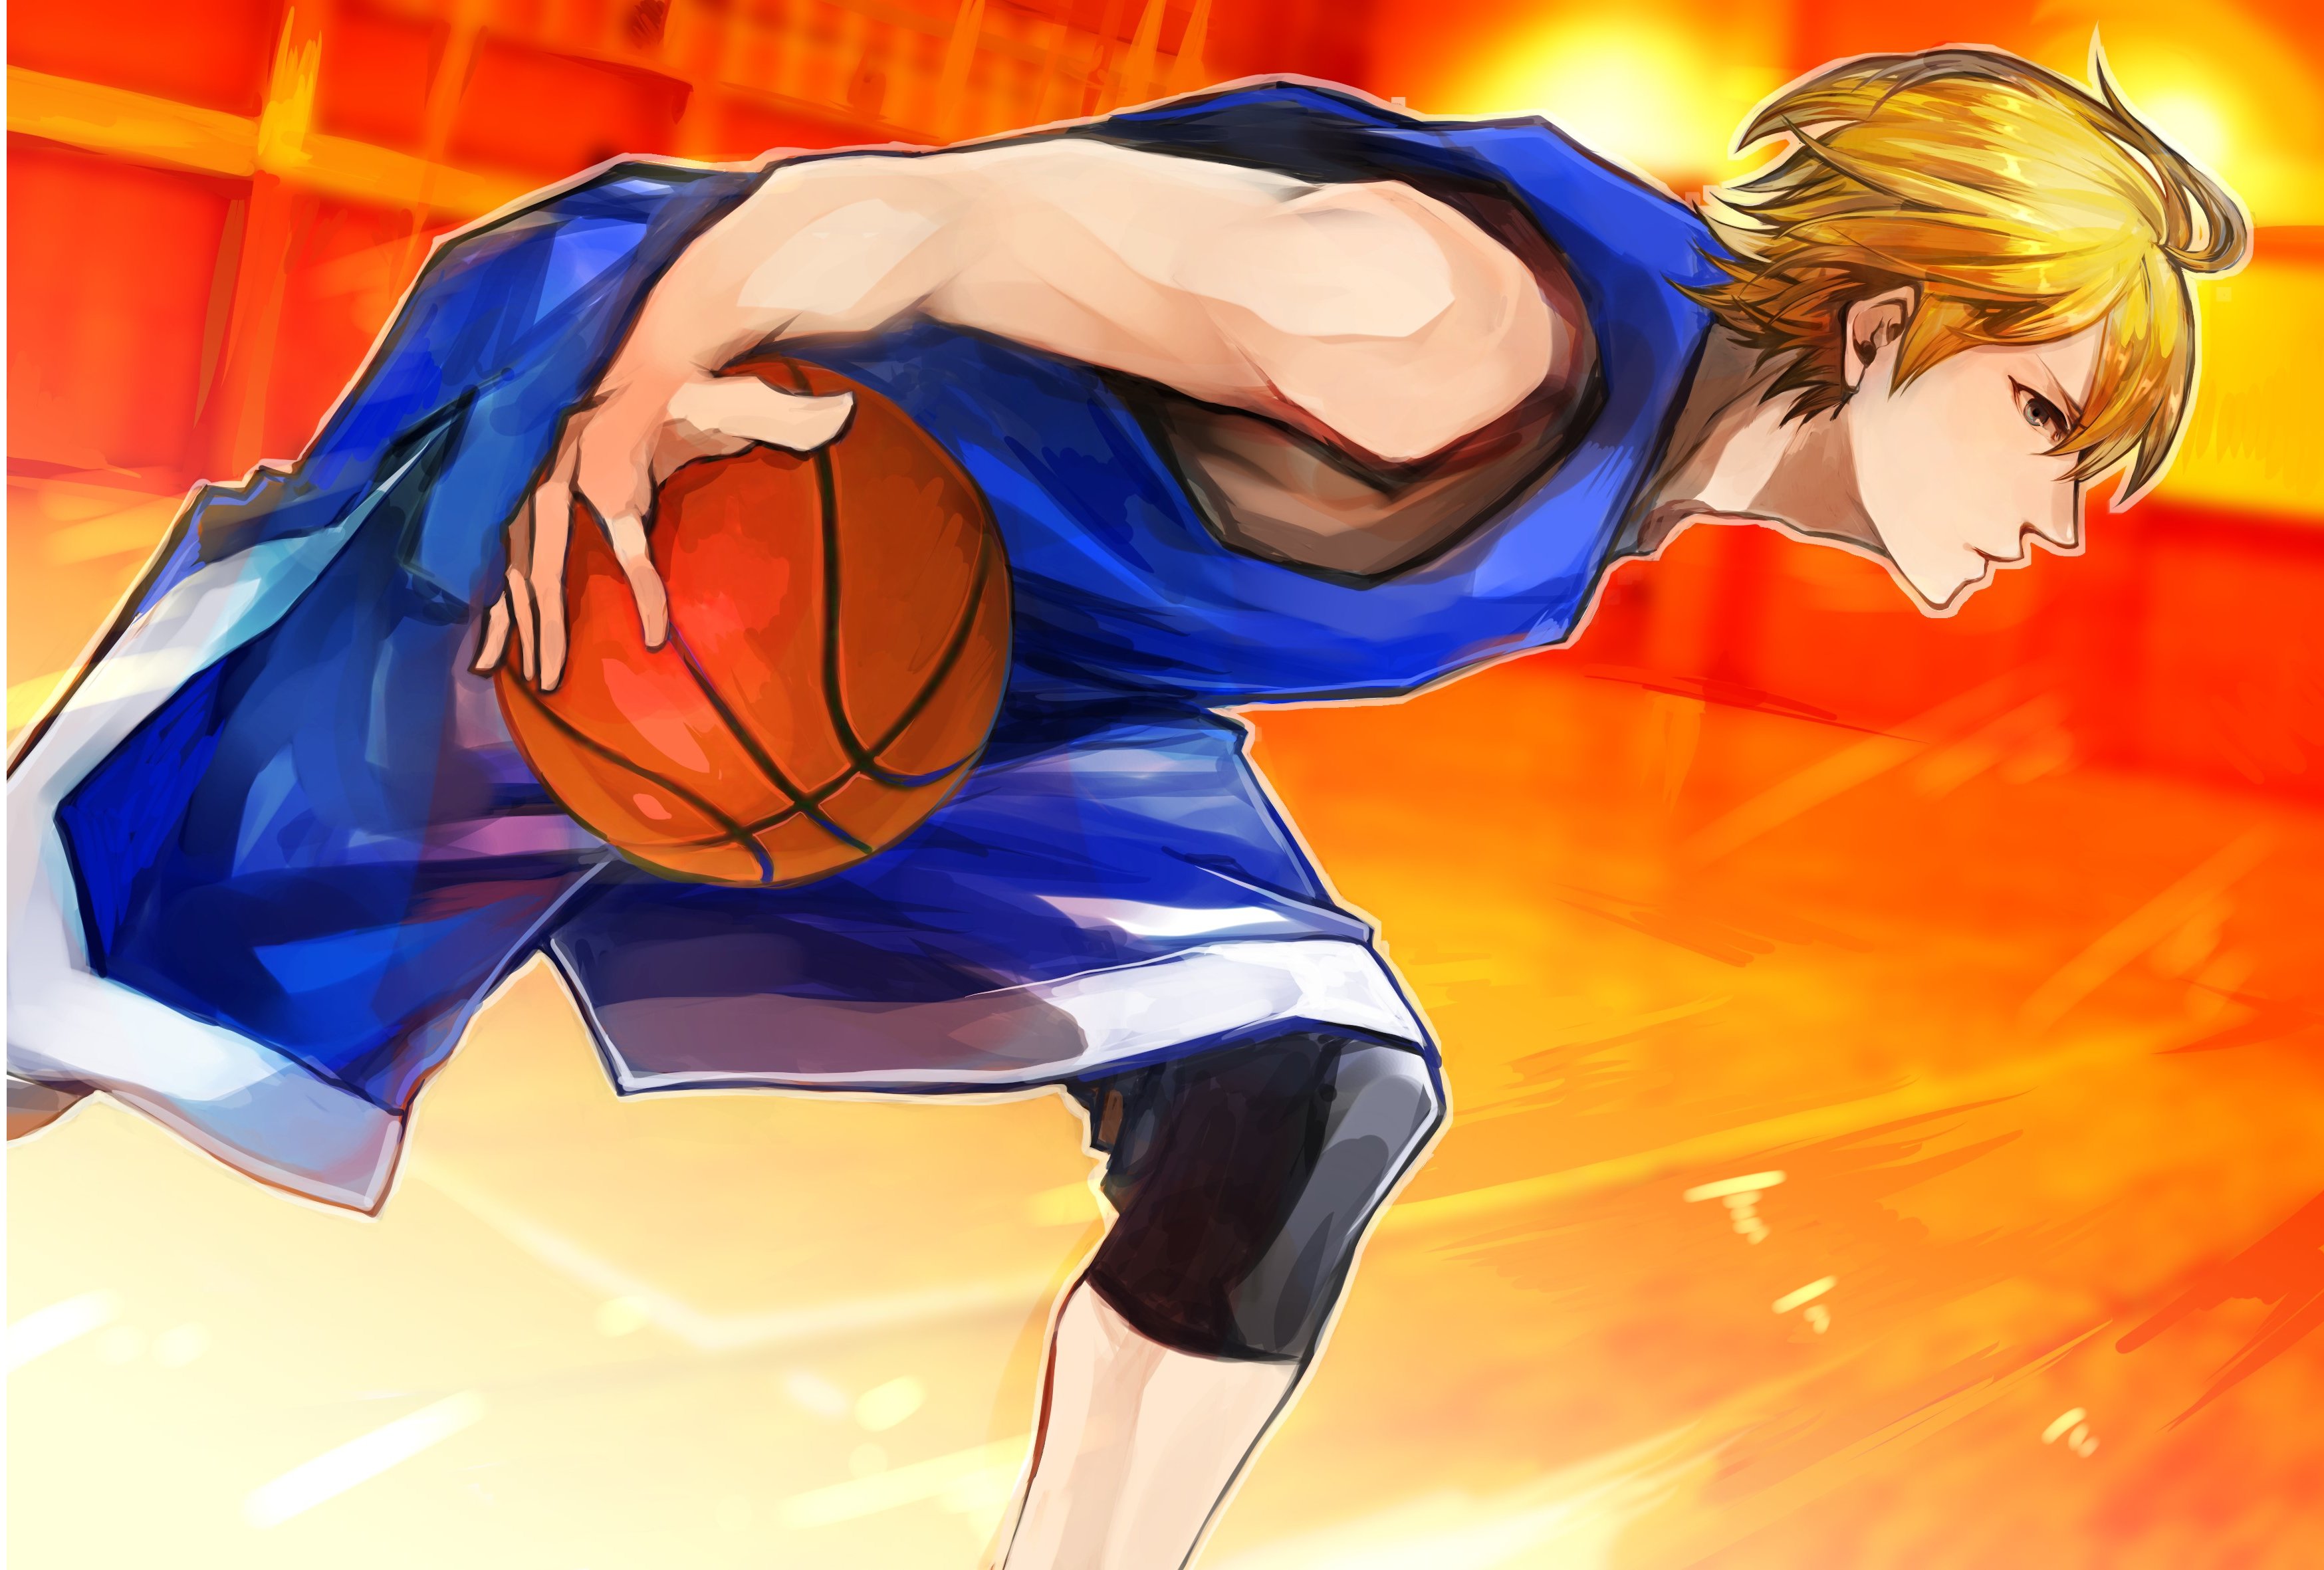 kise wallpaper,dibujos animados,anime,baloncesto,jugador de baloncesto,movimientos de baloncesto